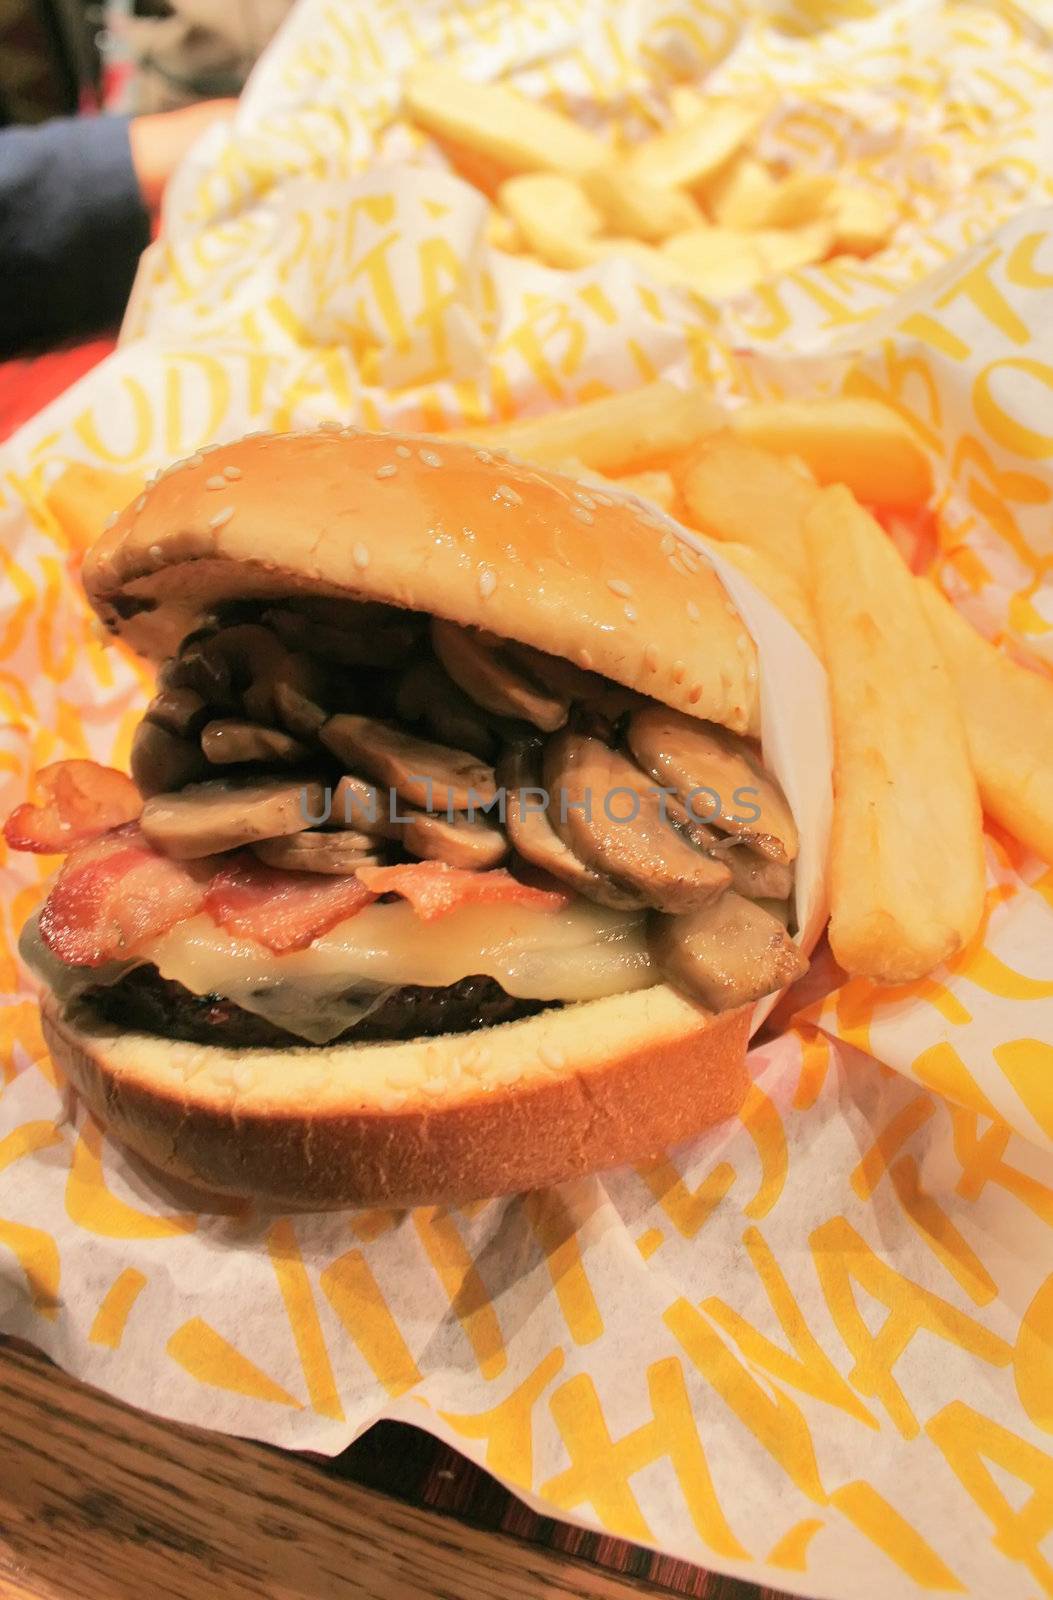 Giant Mushroom Burger and Fries